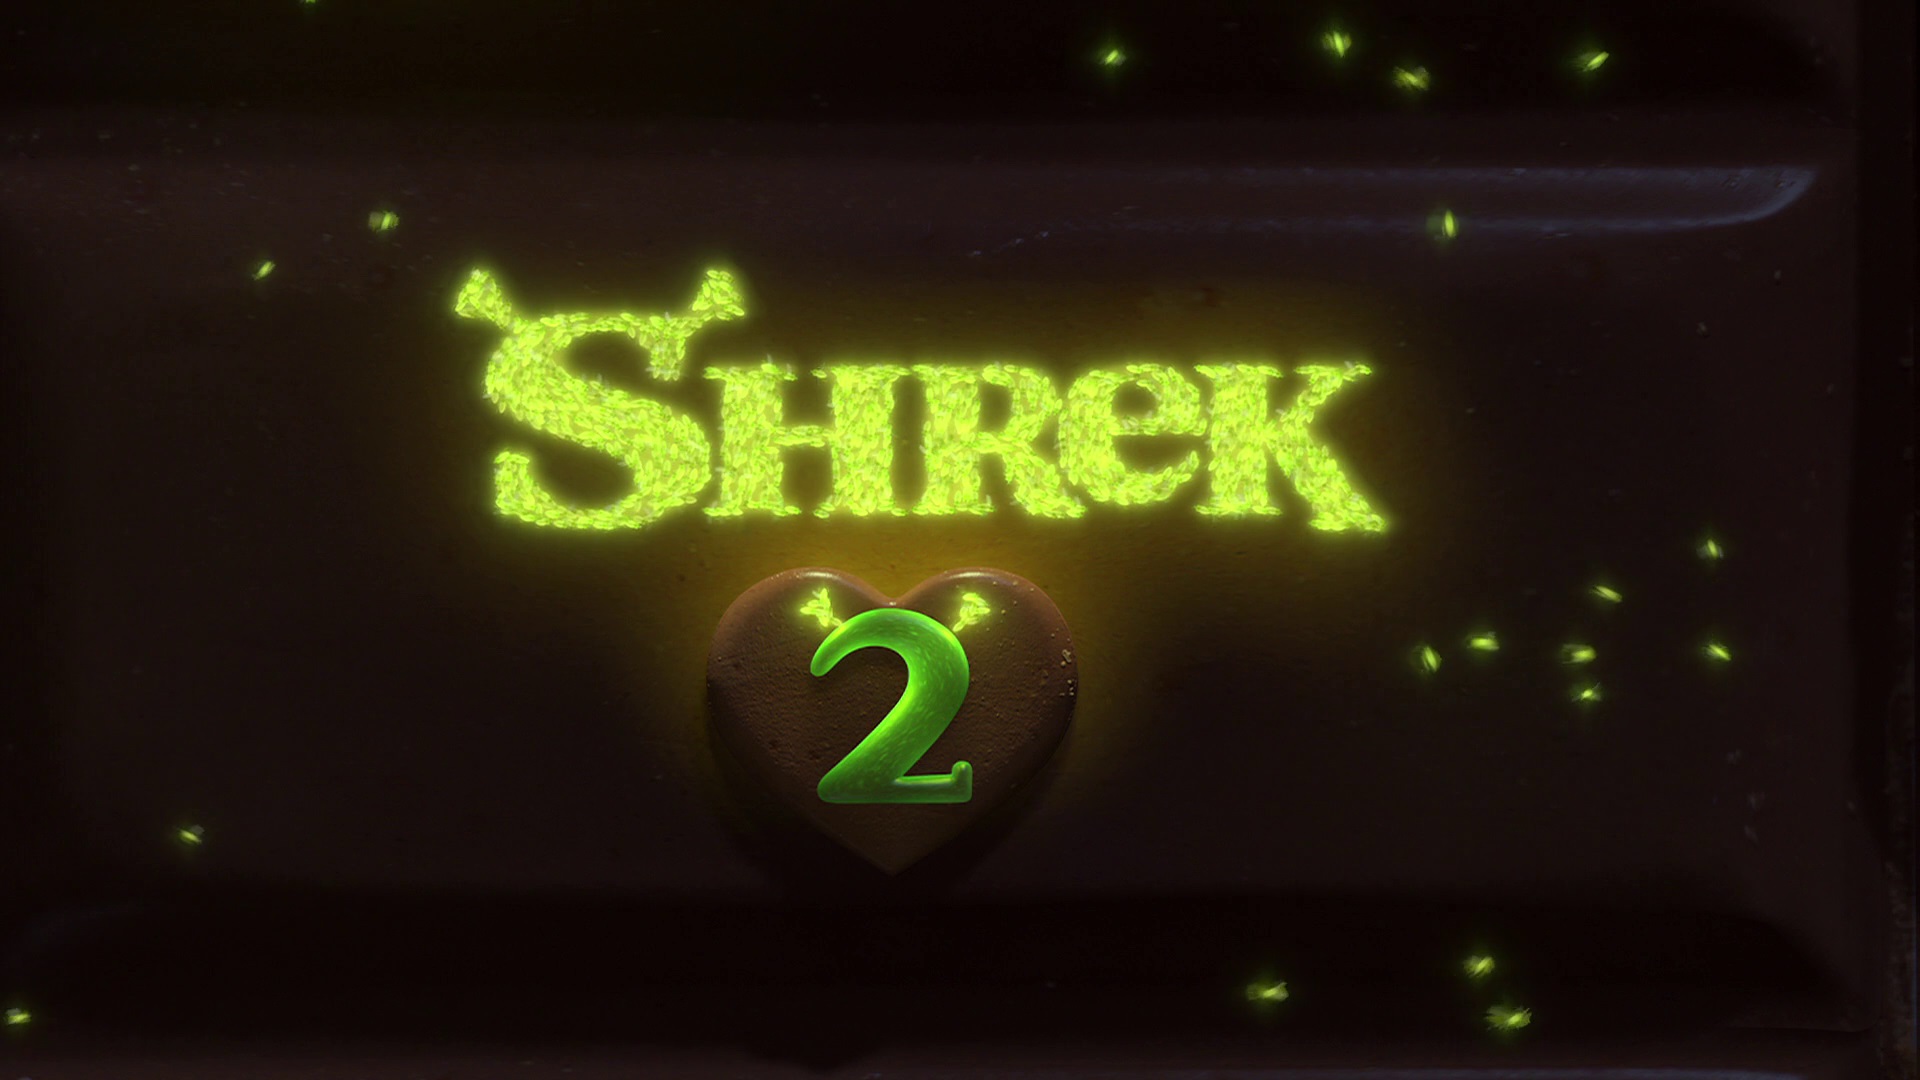 Shrek 2 instal the new